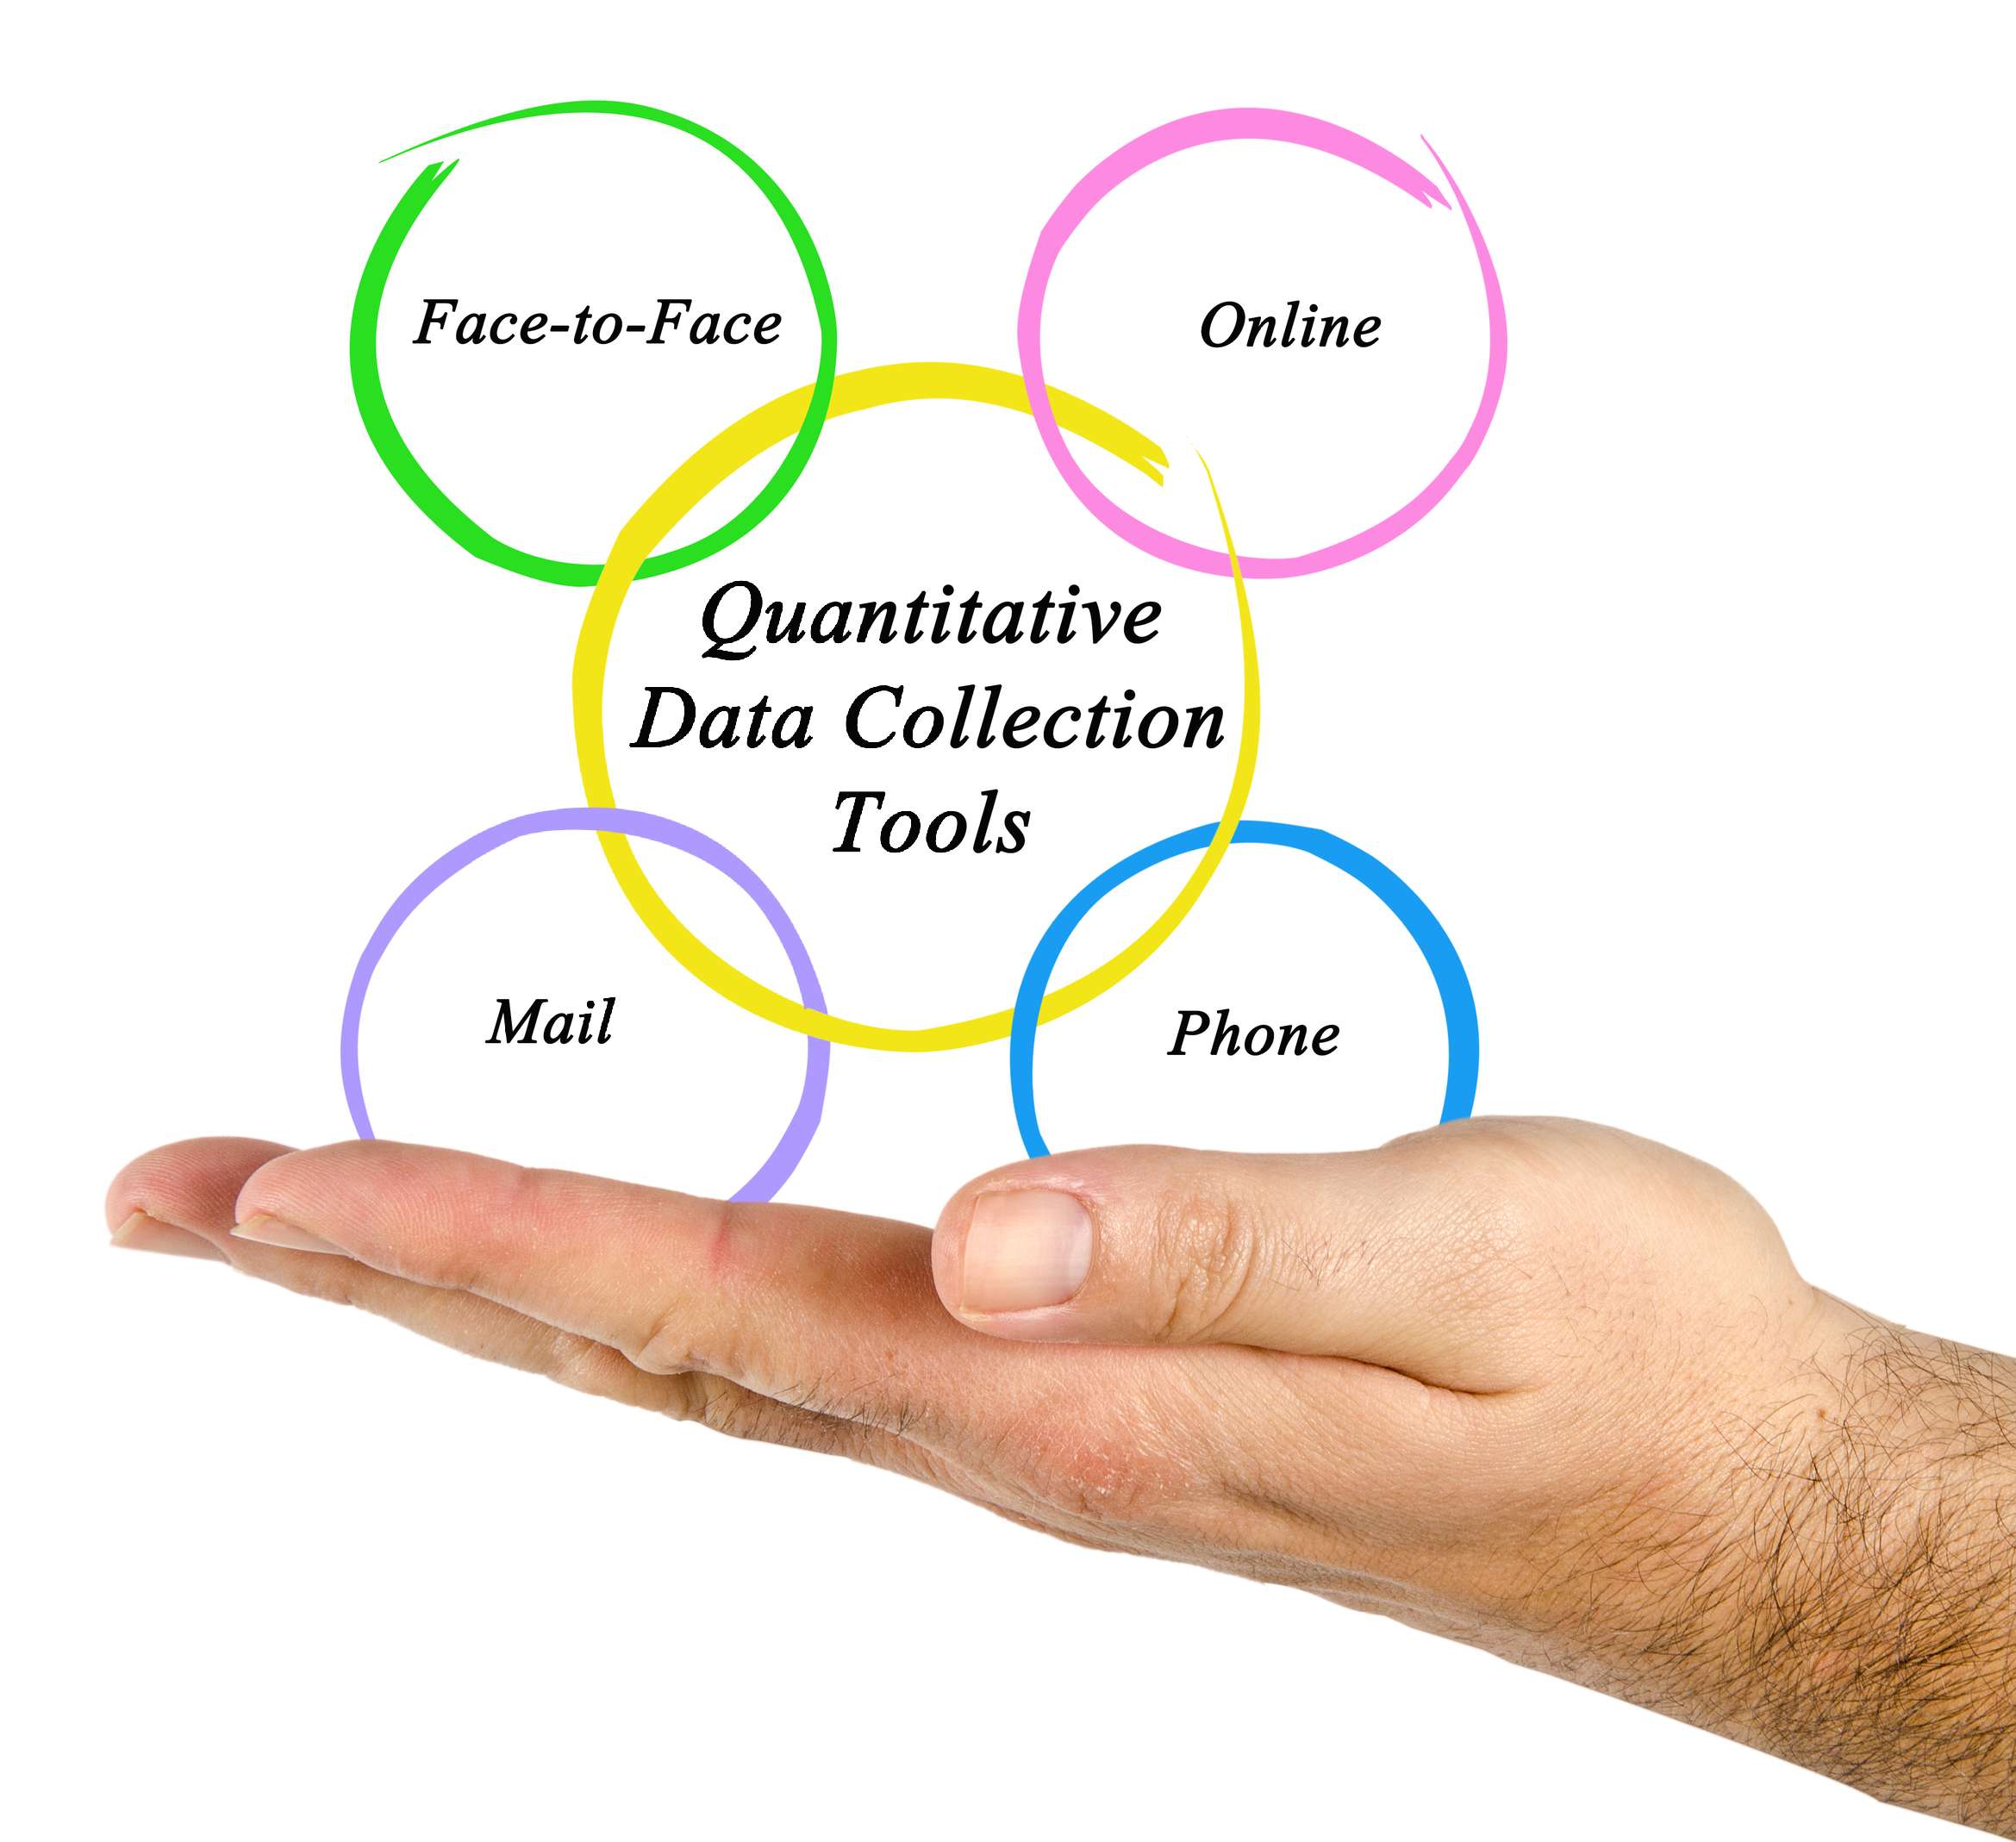 Quantitative Data Collection Tools